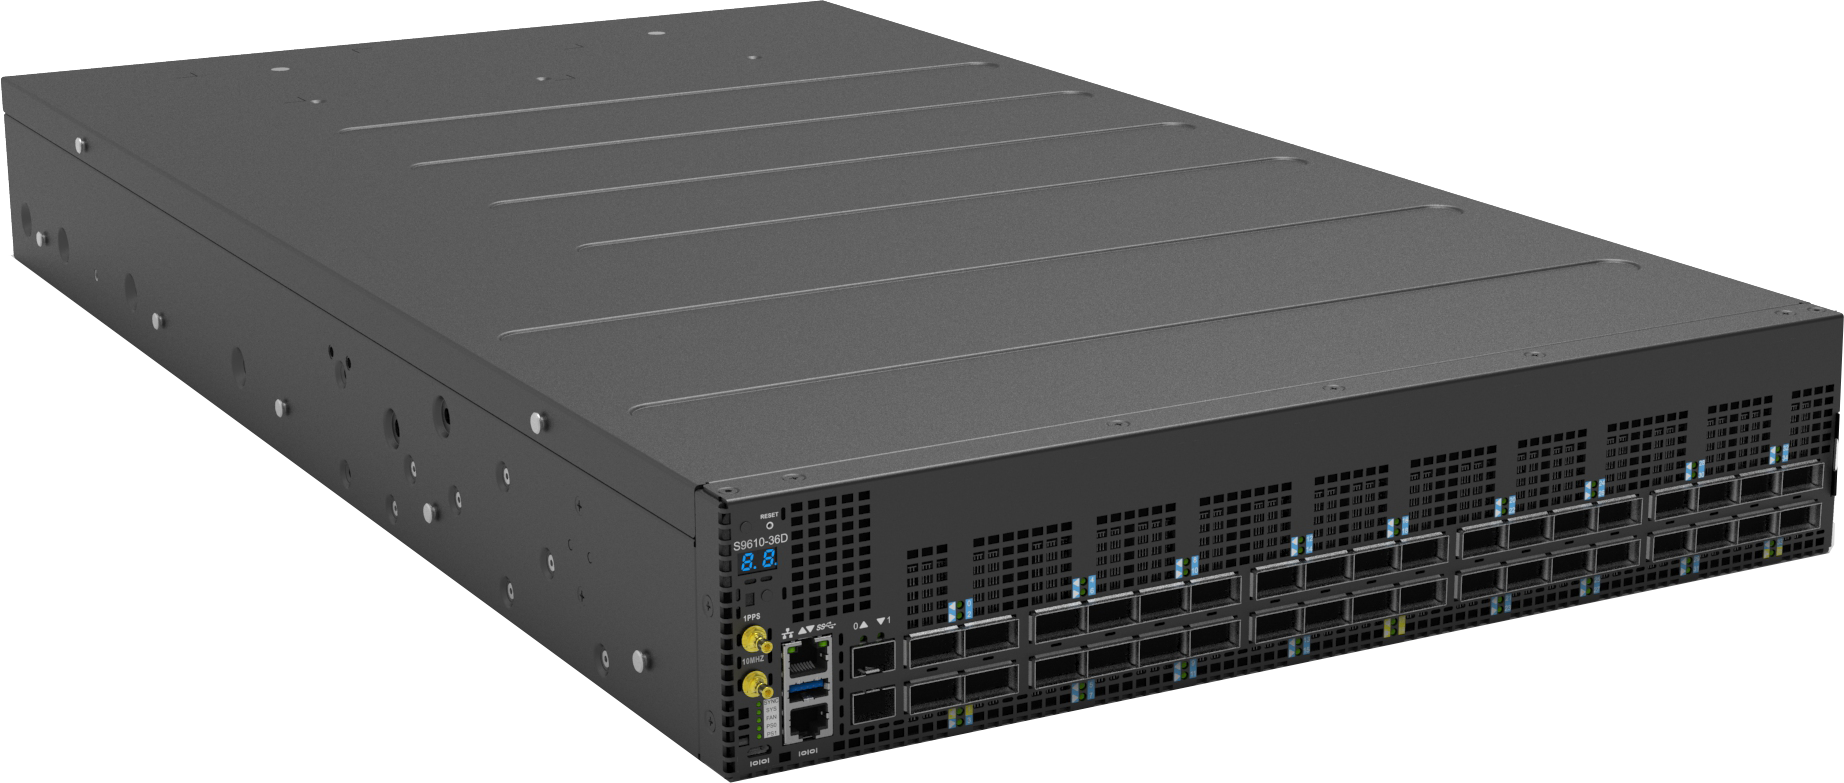 S9610-36D Open Aggregation Router